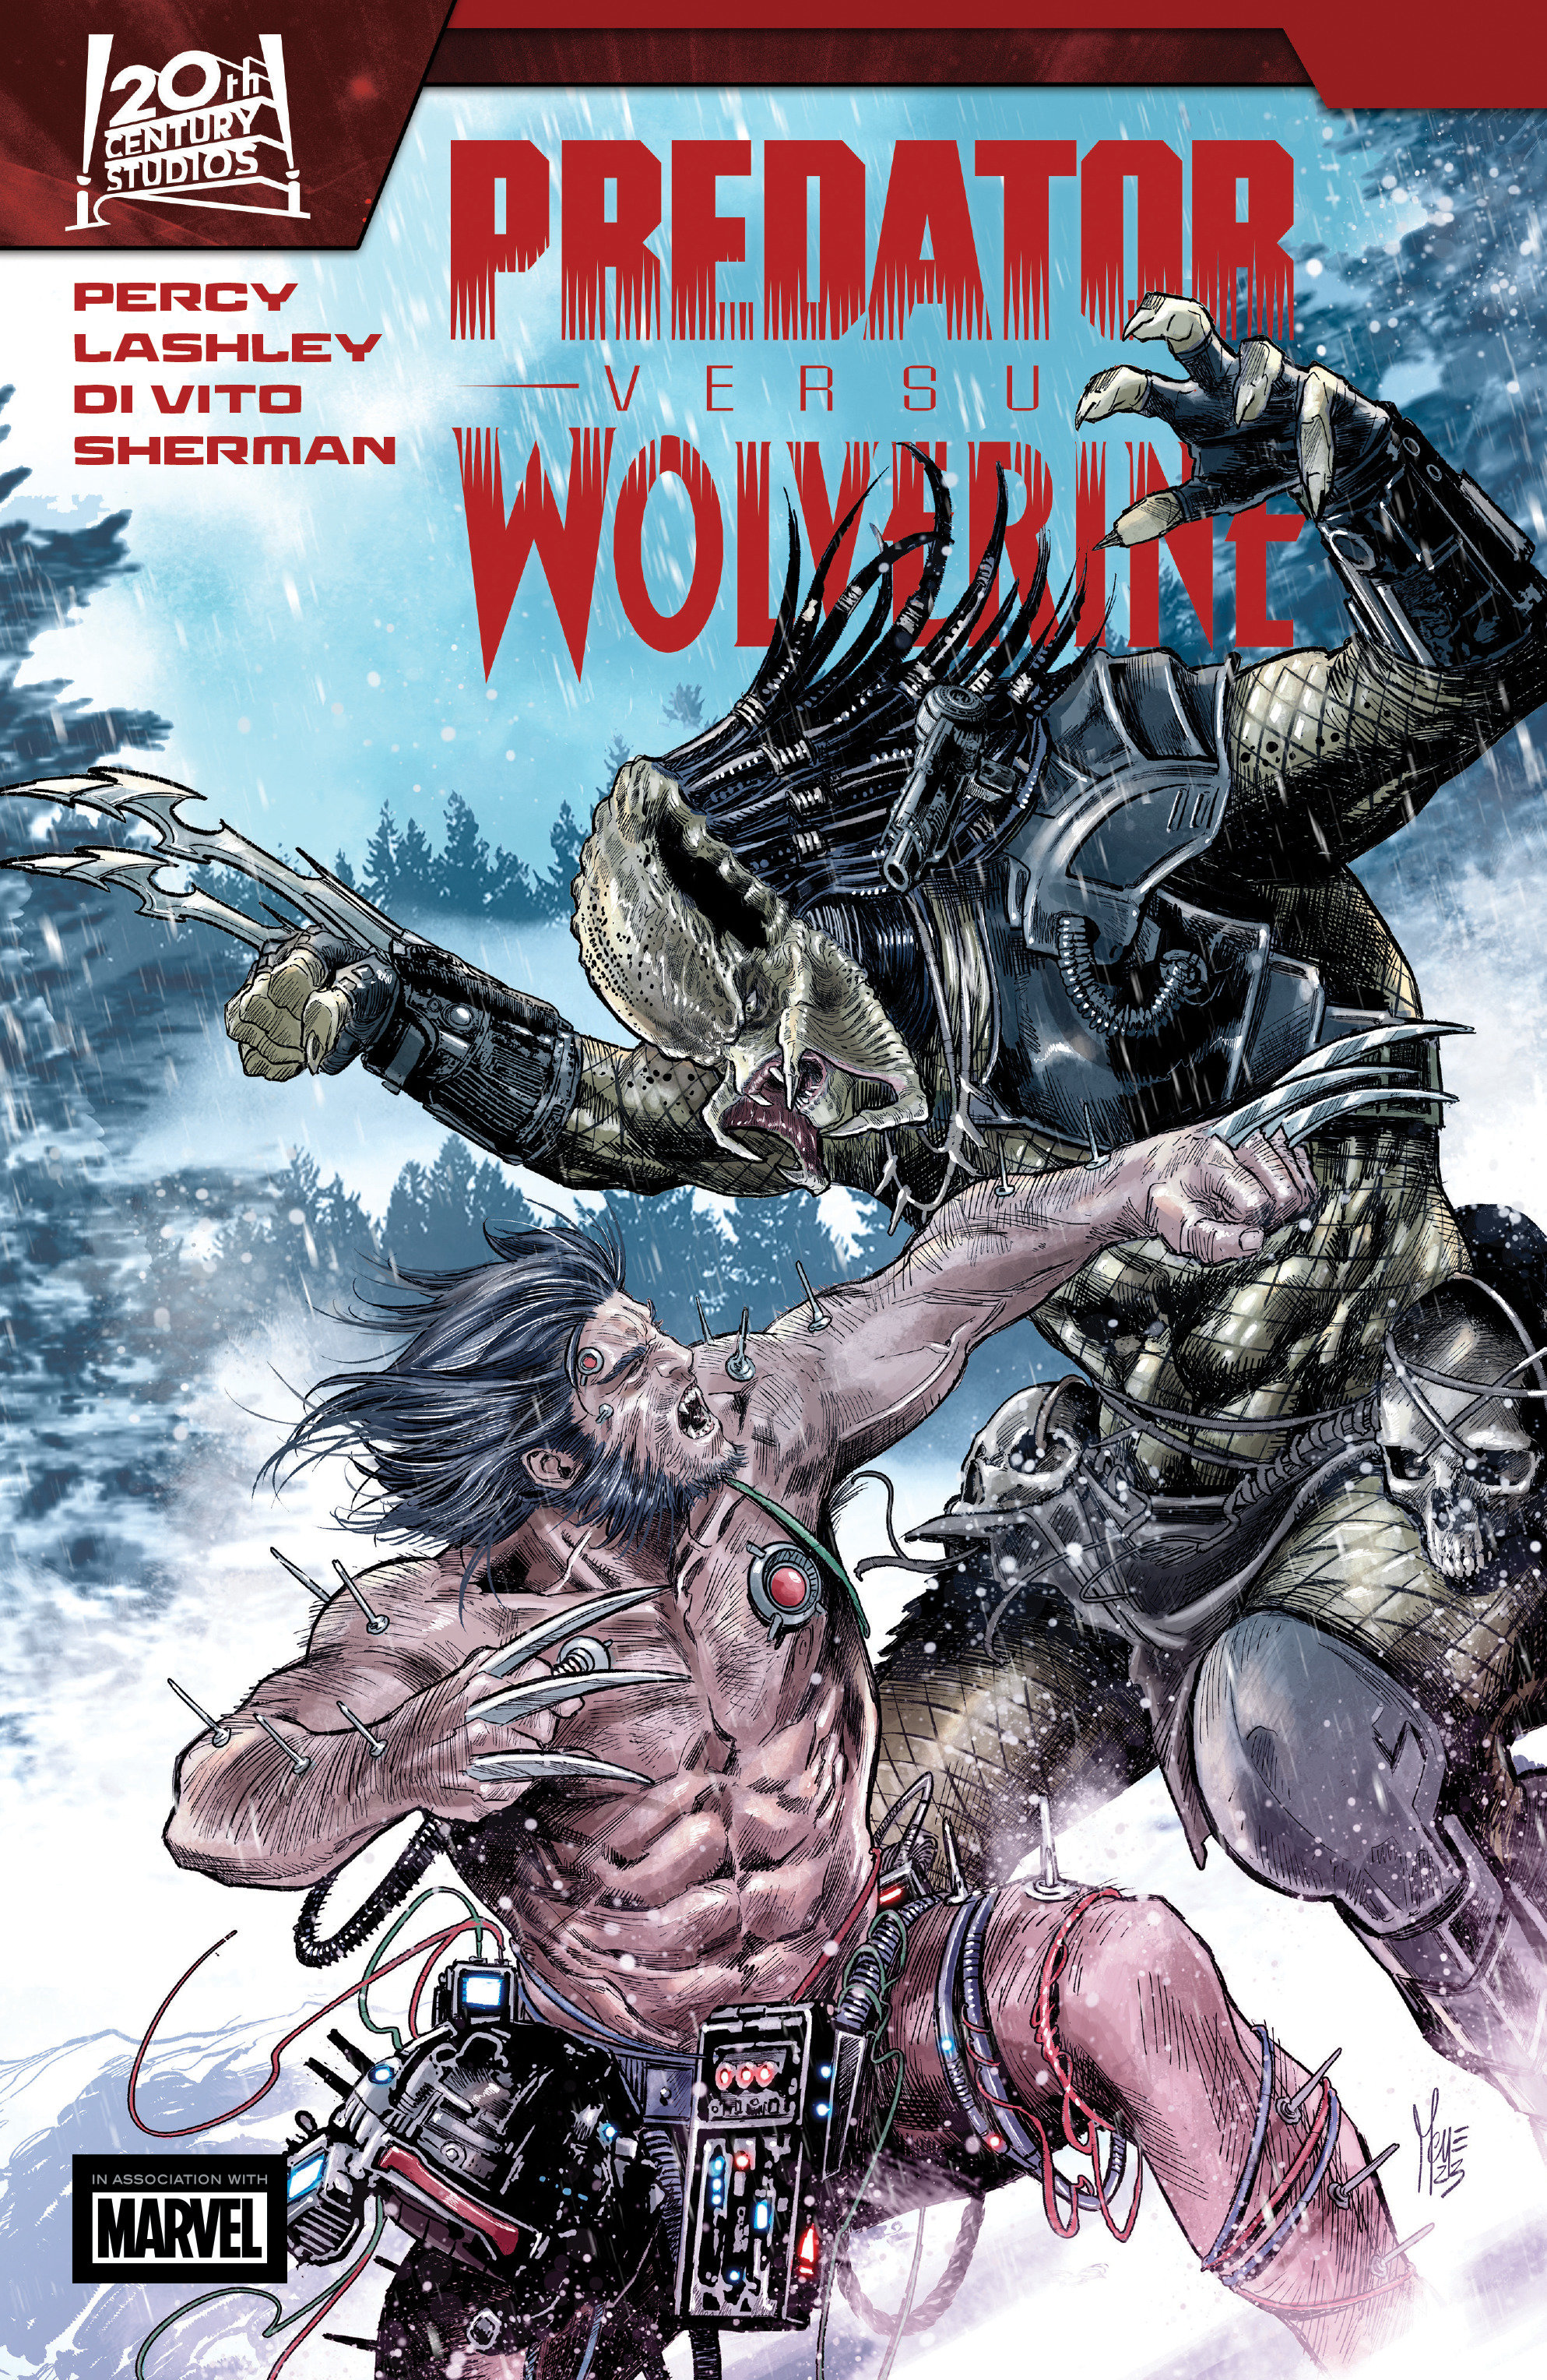 Predator Vs. Wolverine Graphic Novel Volume 1